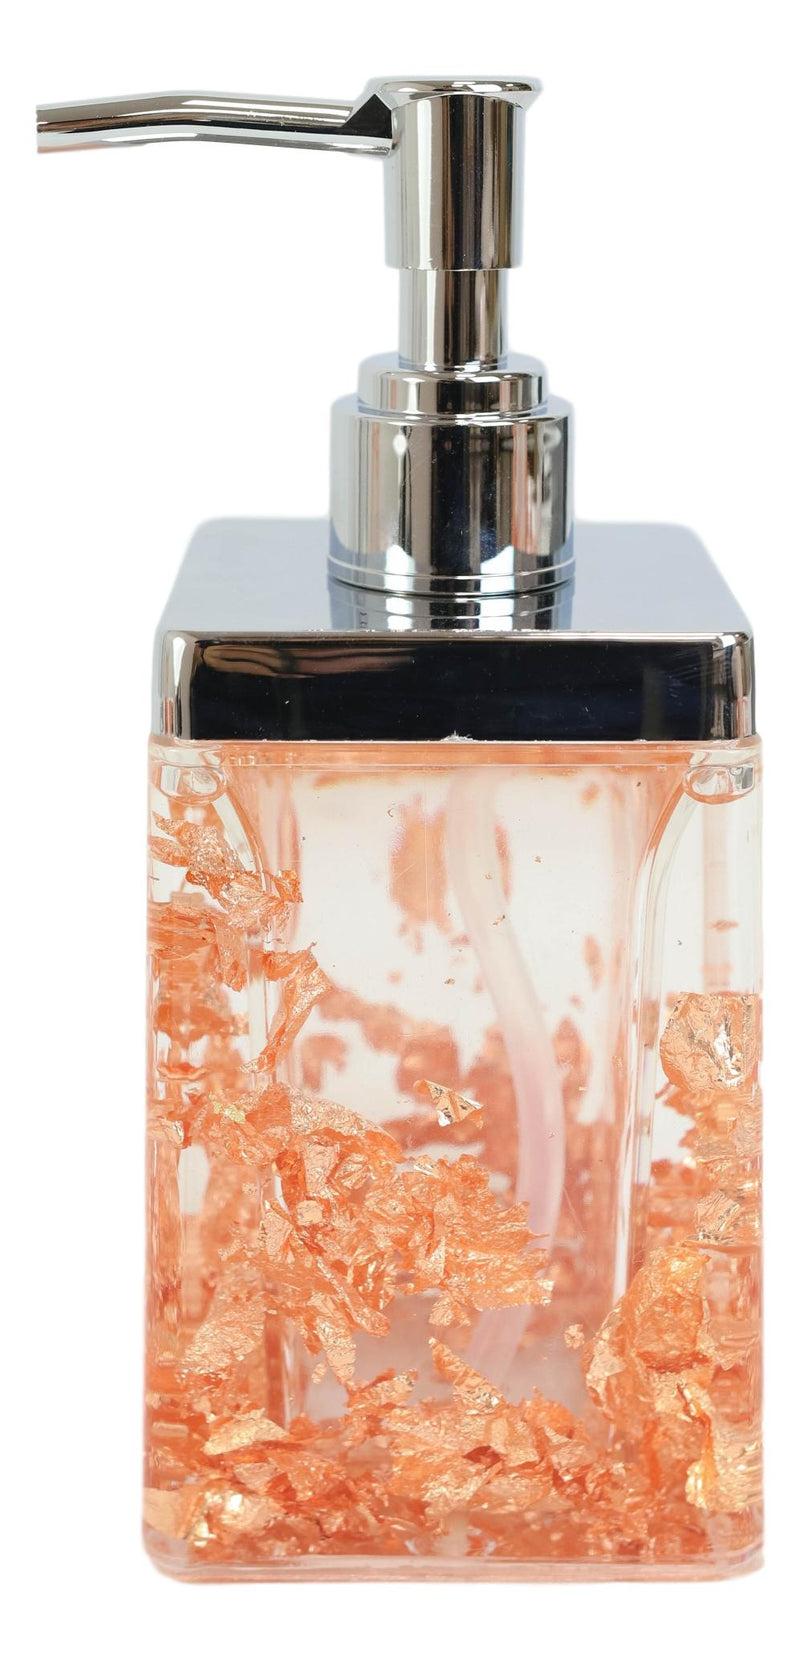 Golden Copper Flakes & Specks 5 Piece Chic Bathroom Vanity Accessories Gift Set